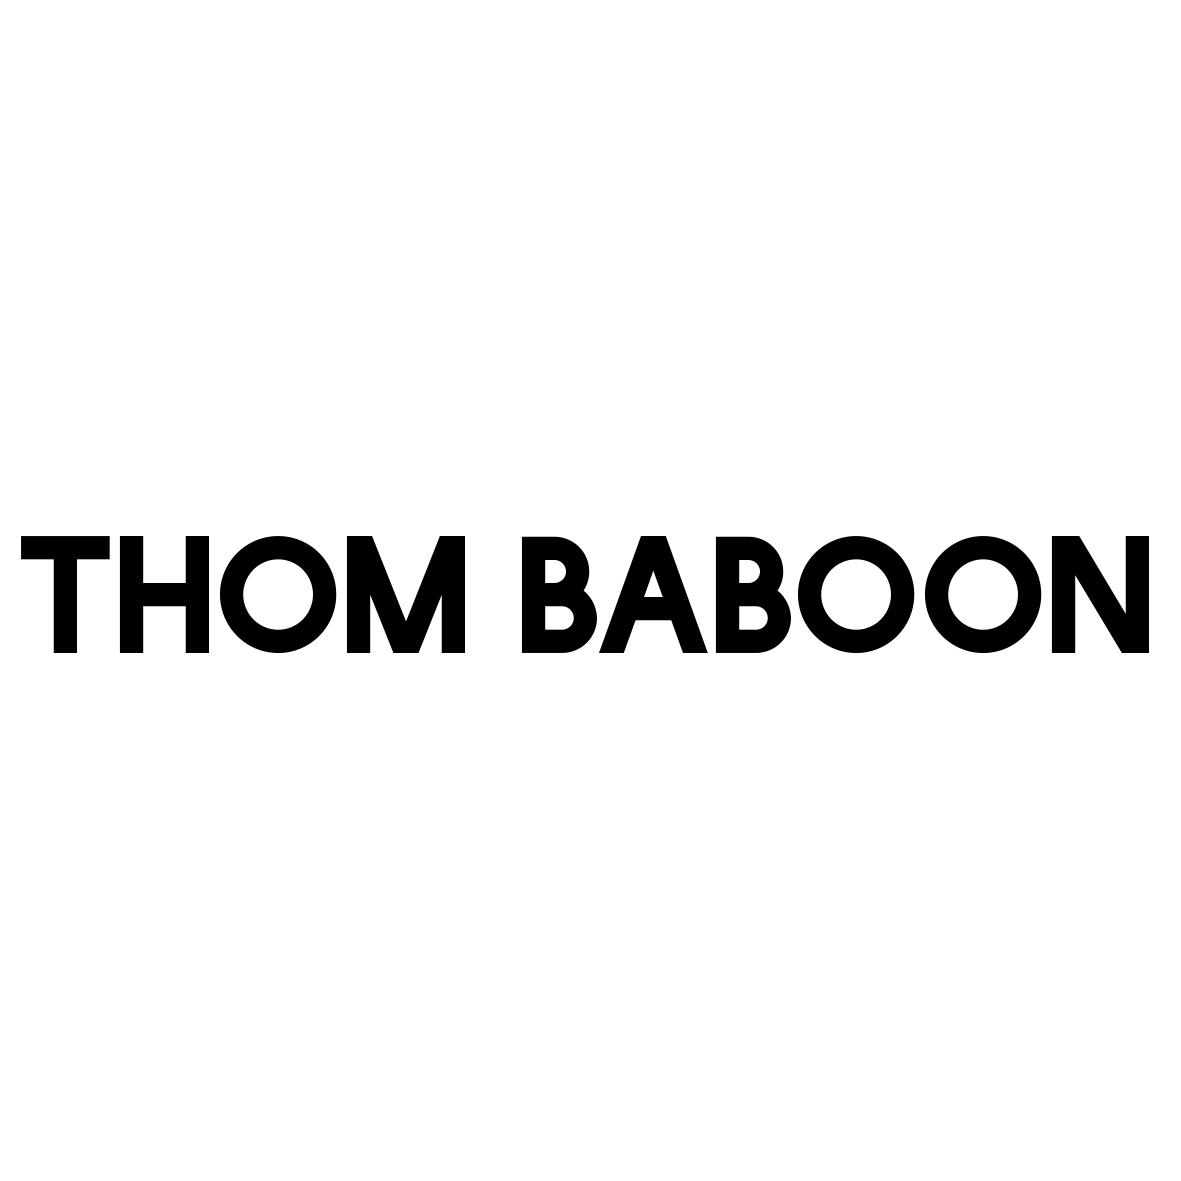 THOM BABOON